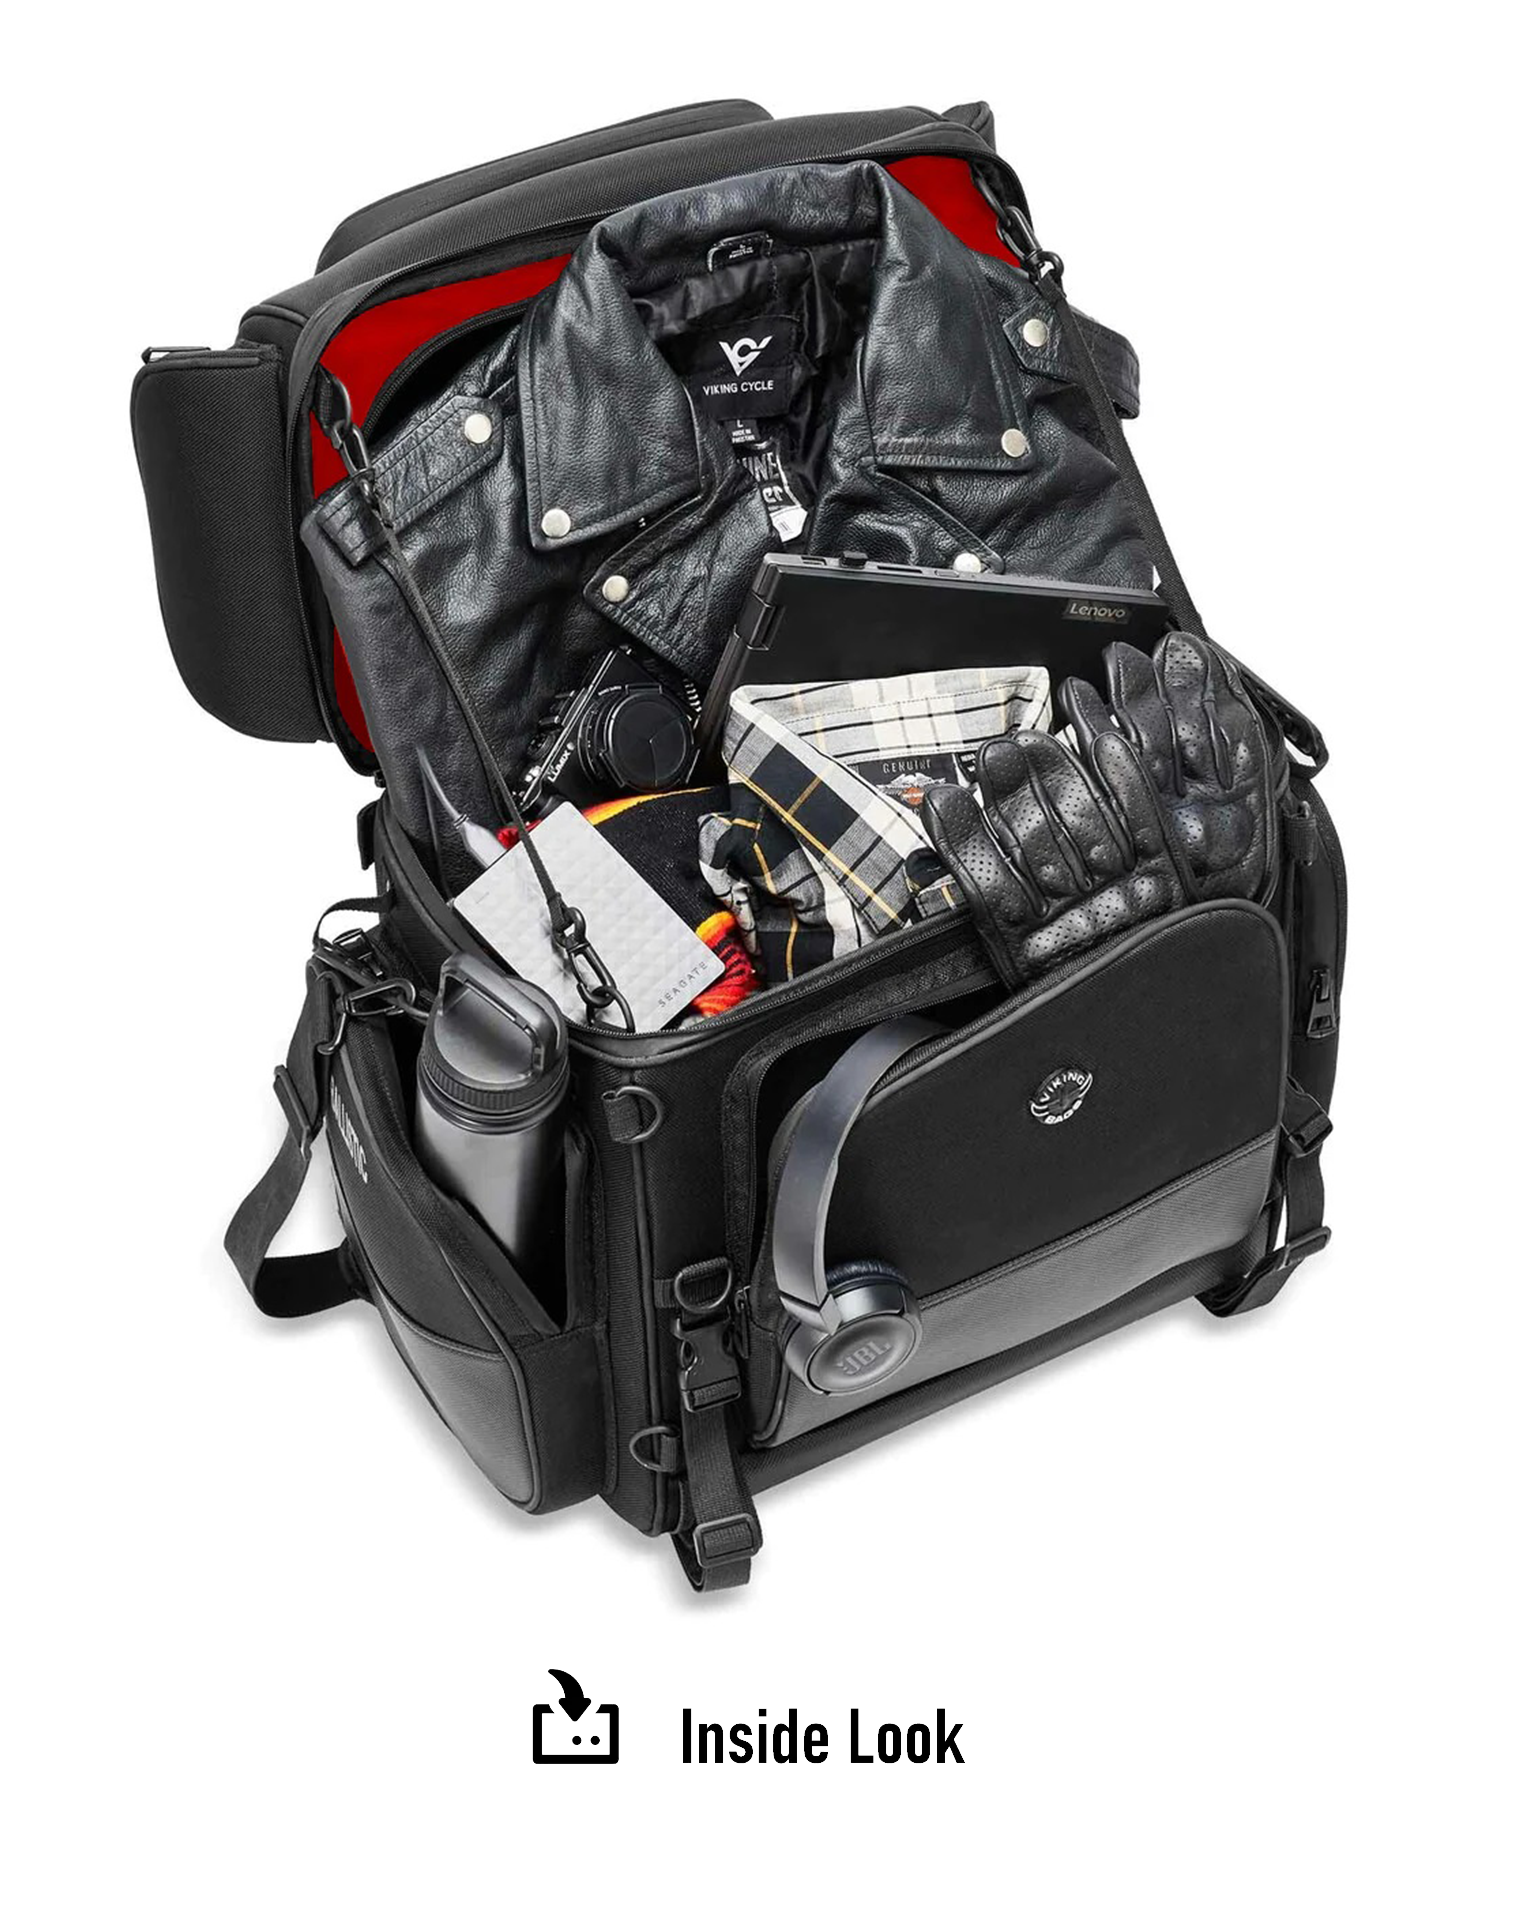 57L - Voyage Premium XL Honda Motorcycle Sissy Bar Bag